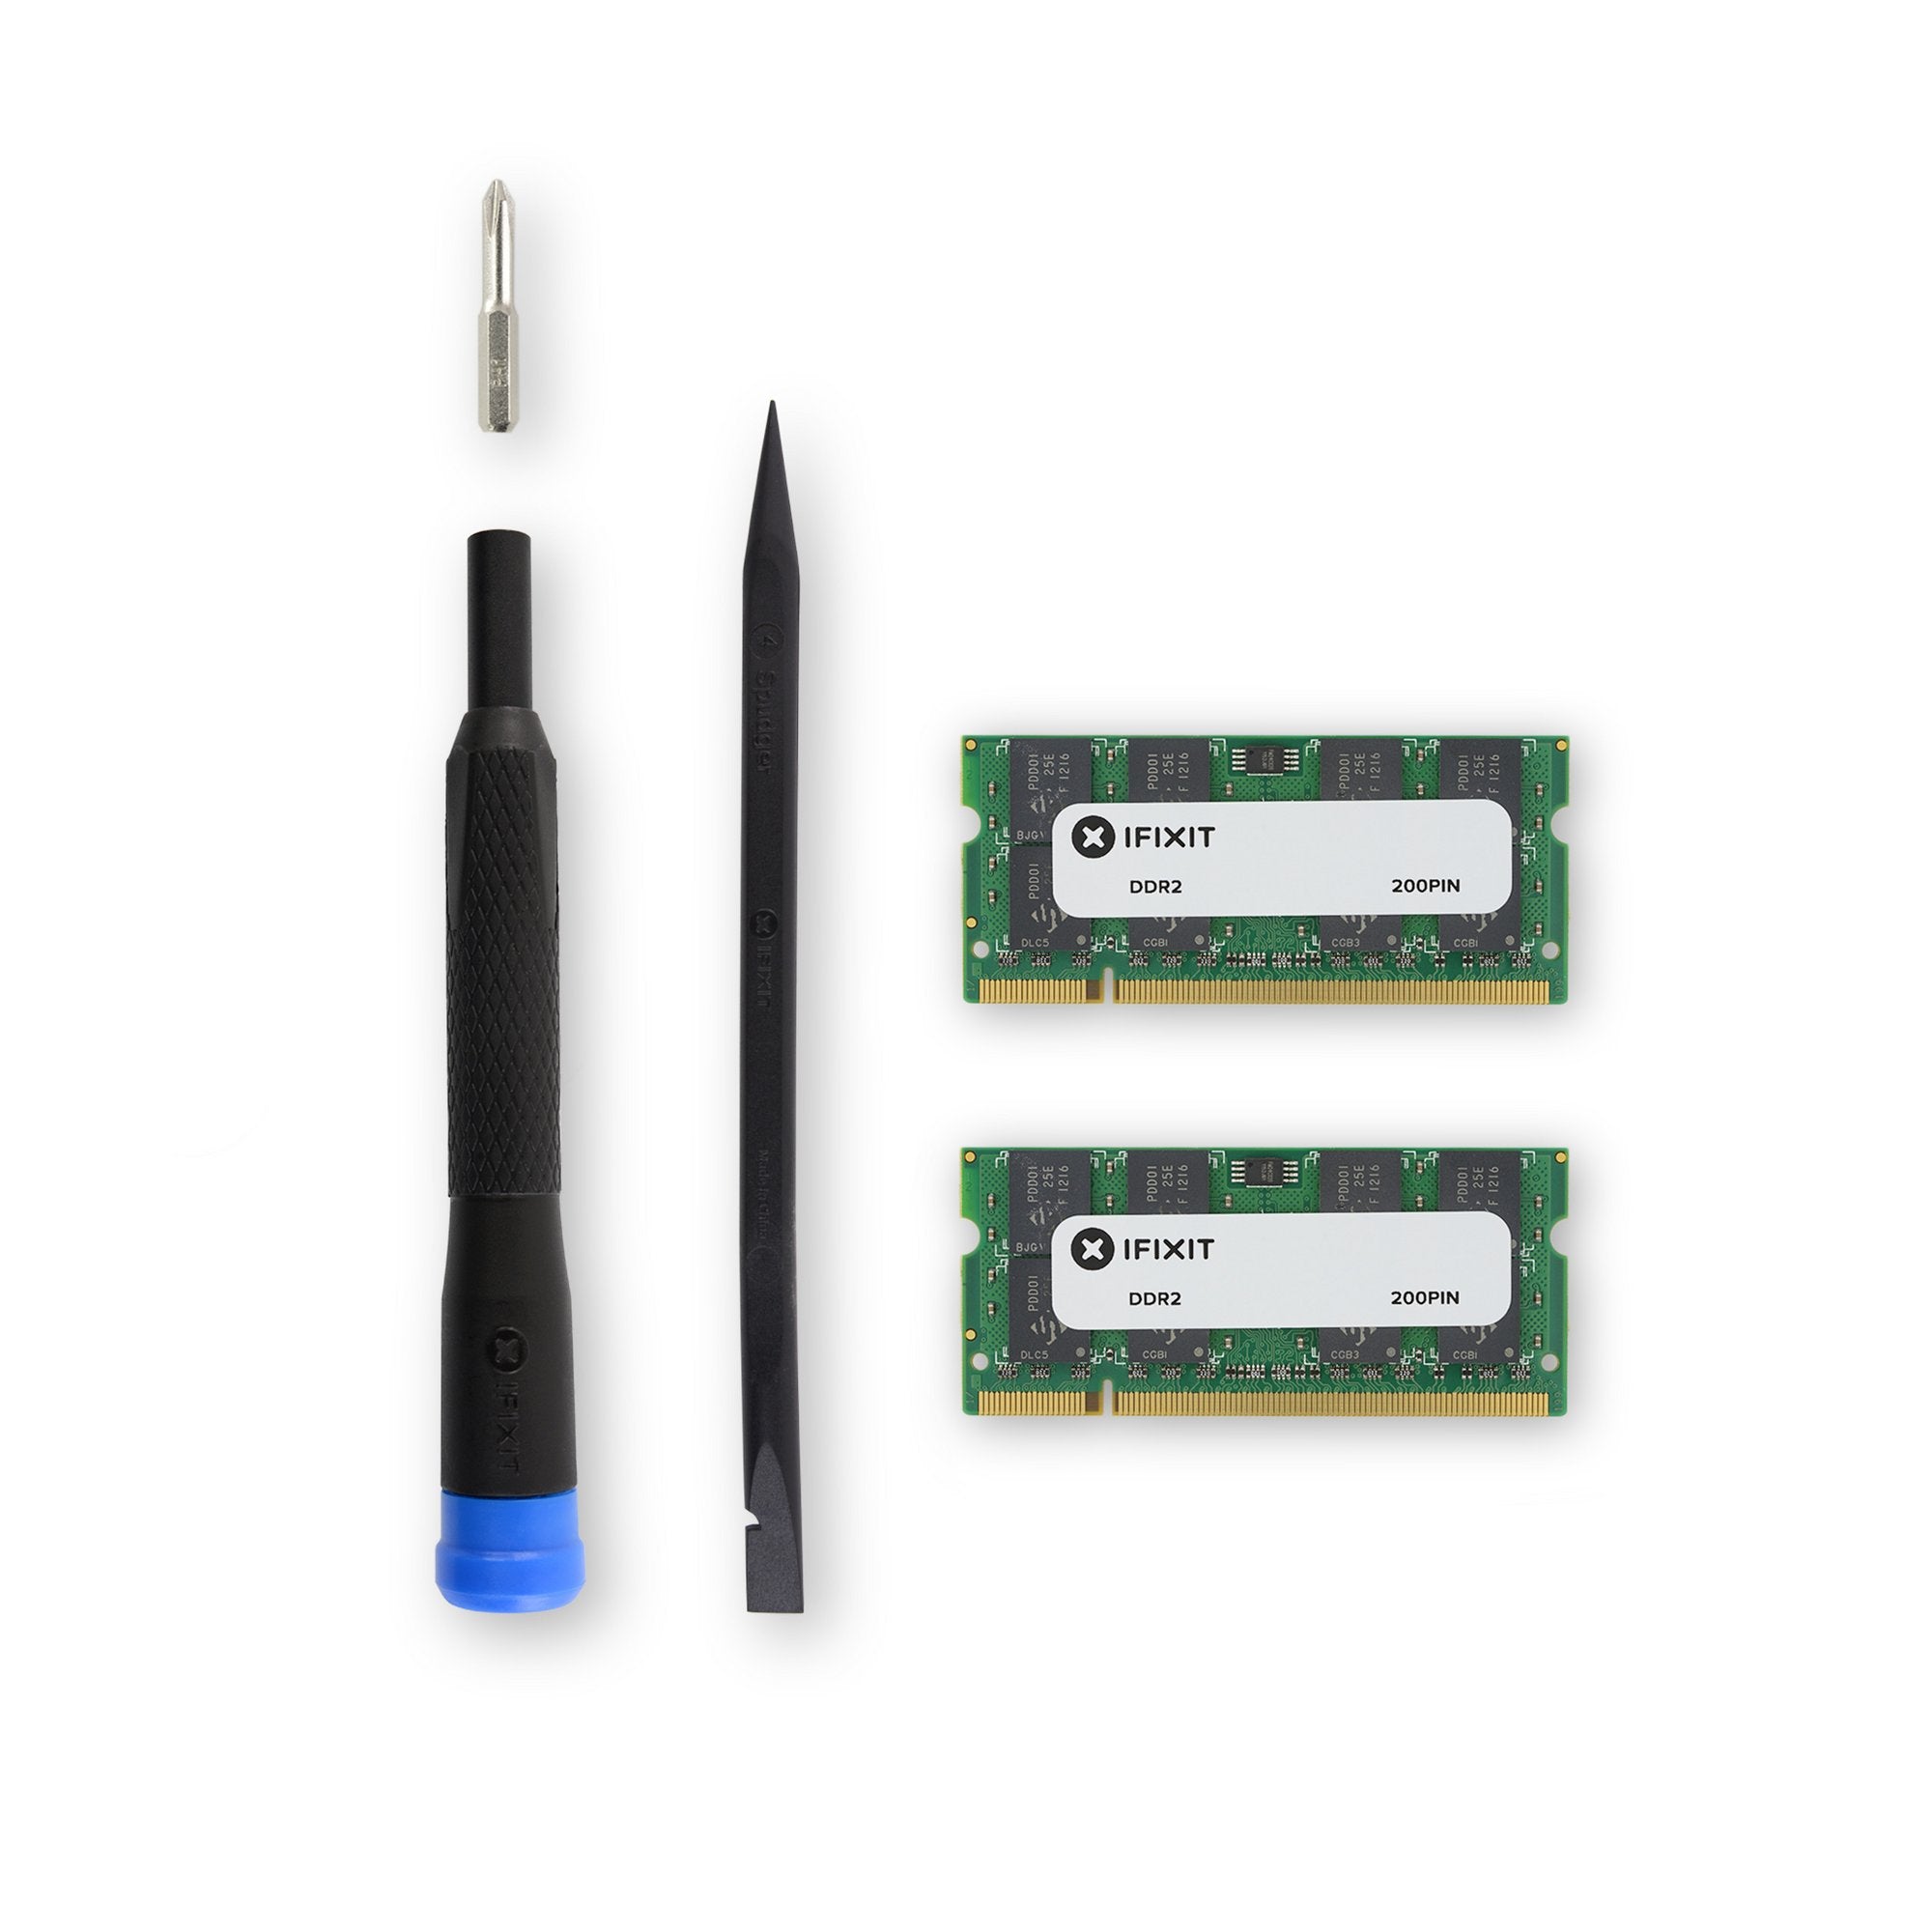 iMac Intel 24" EMC 2134 (Late 2007) Memory Maxxer RAM Upgrade Kit